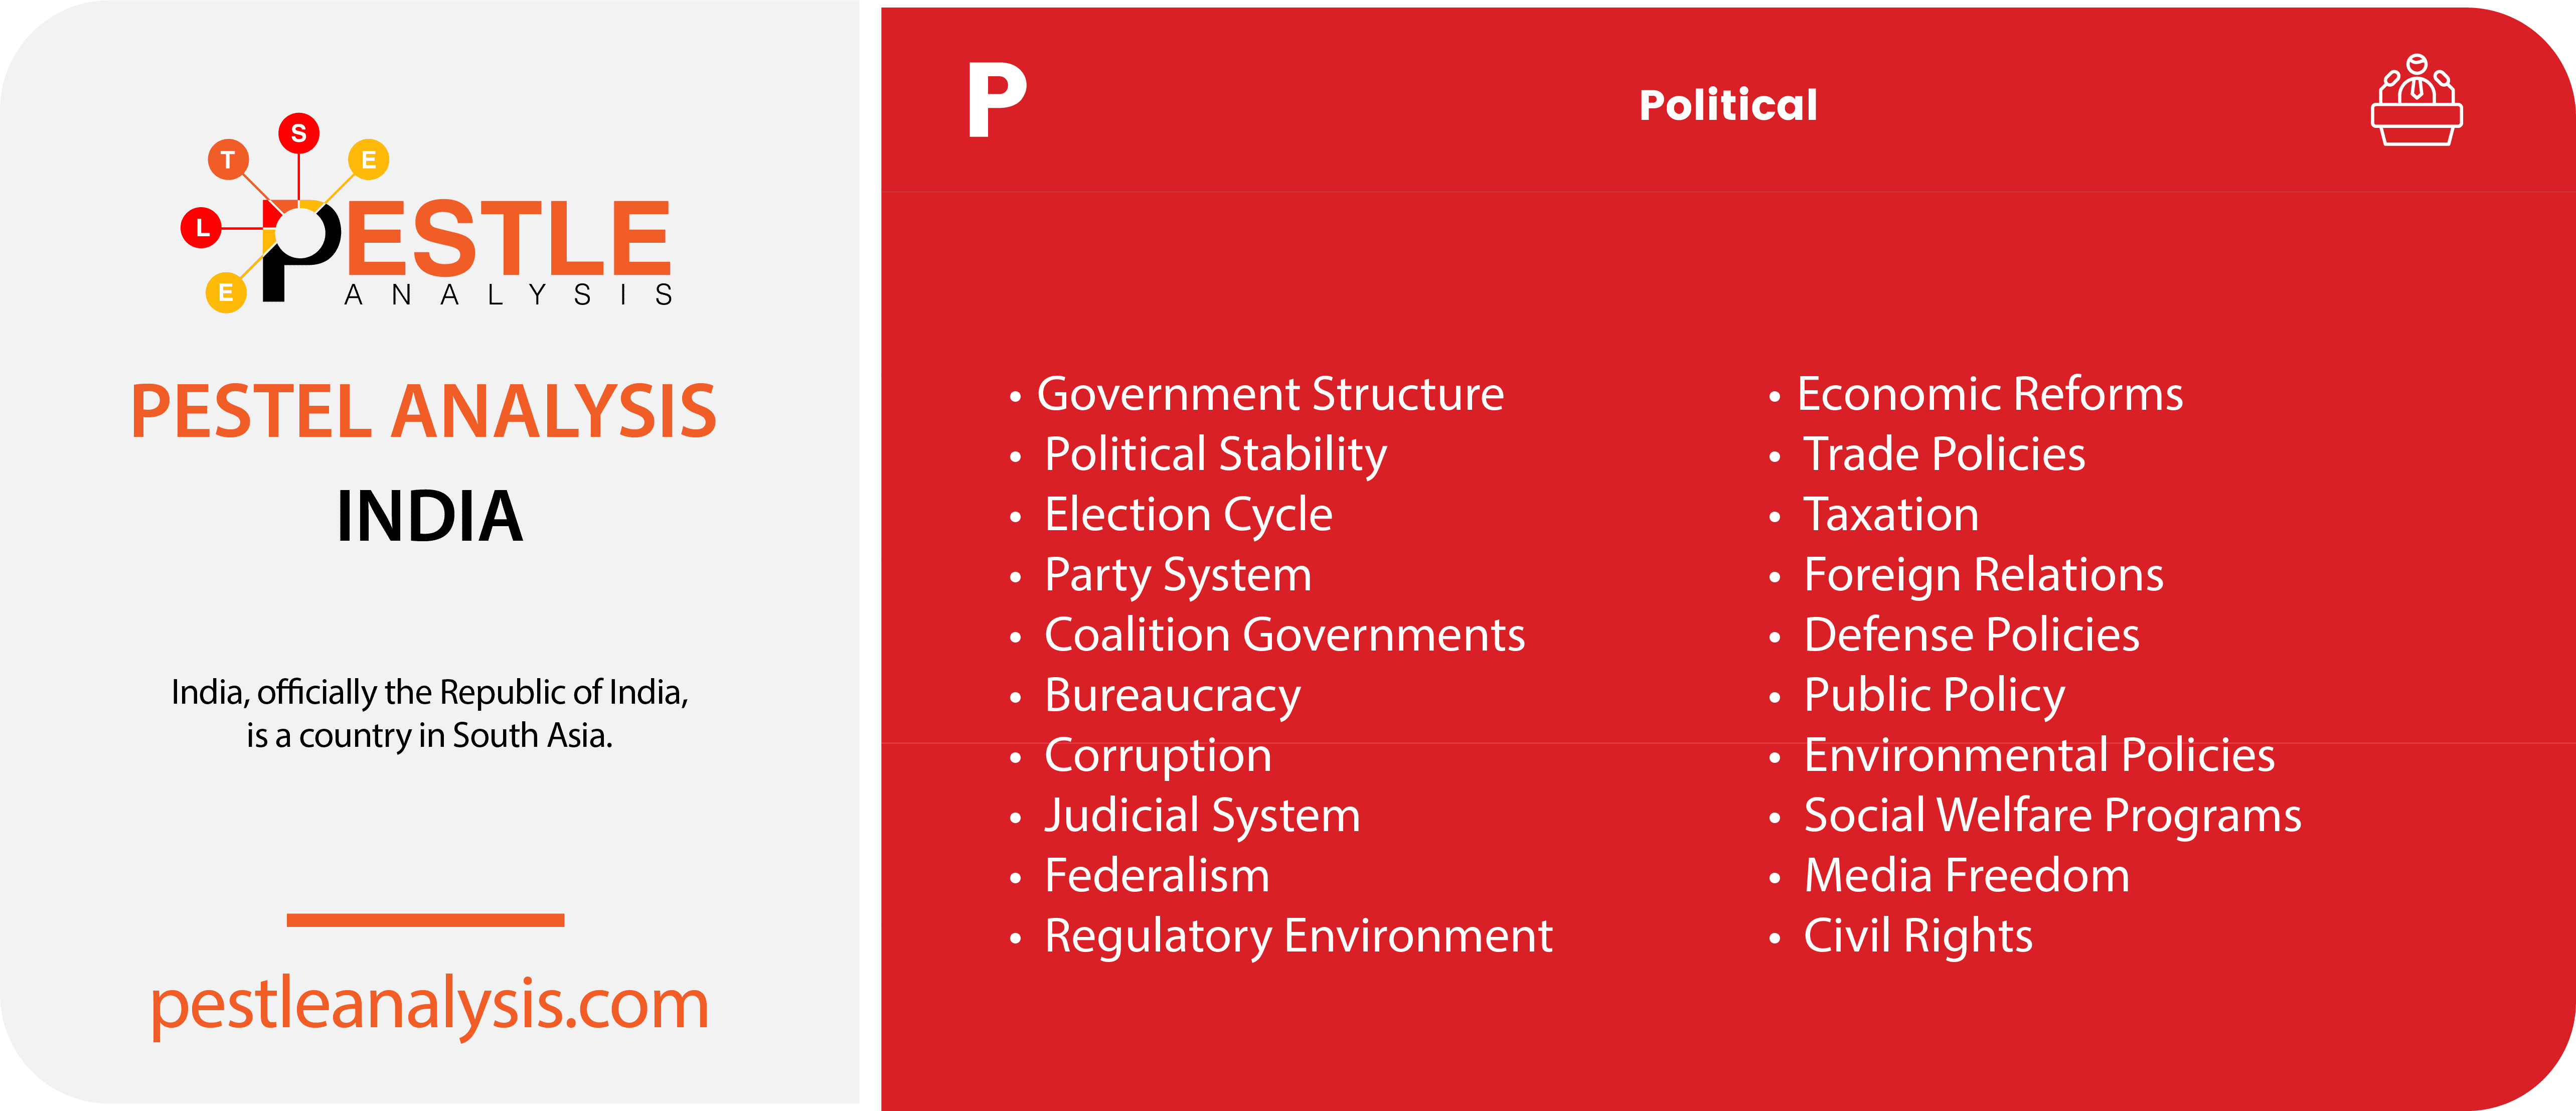 india-pestle-analysis-political-factors-template